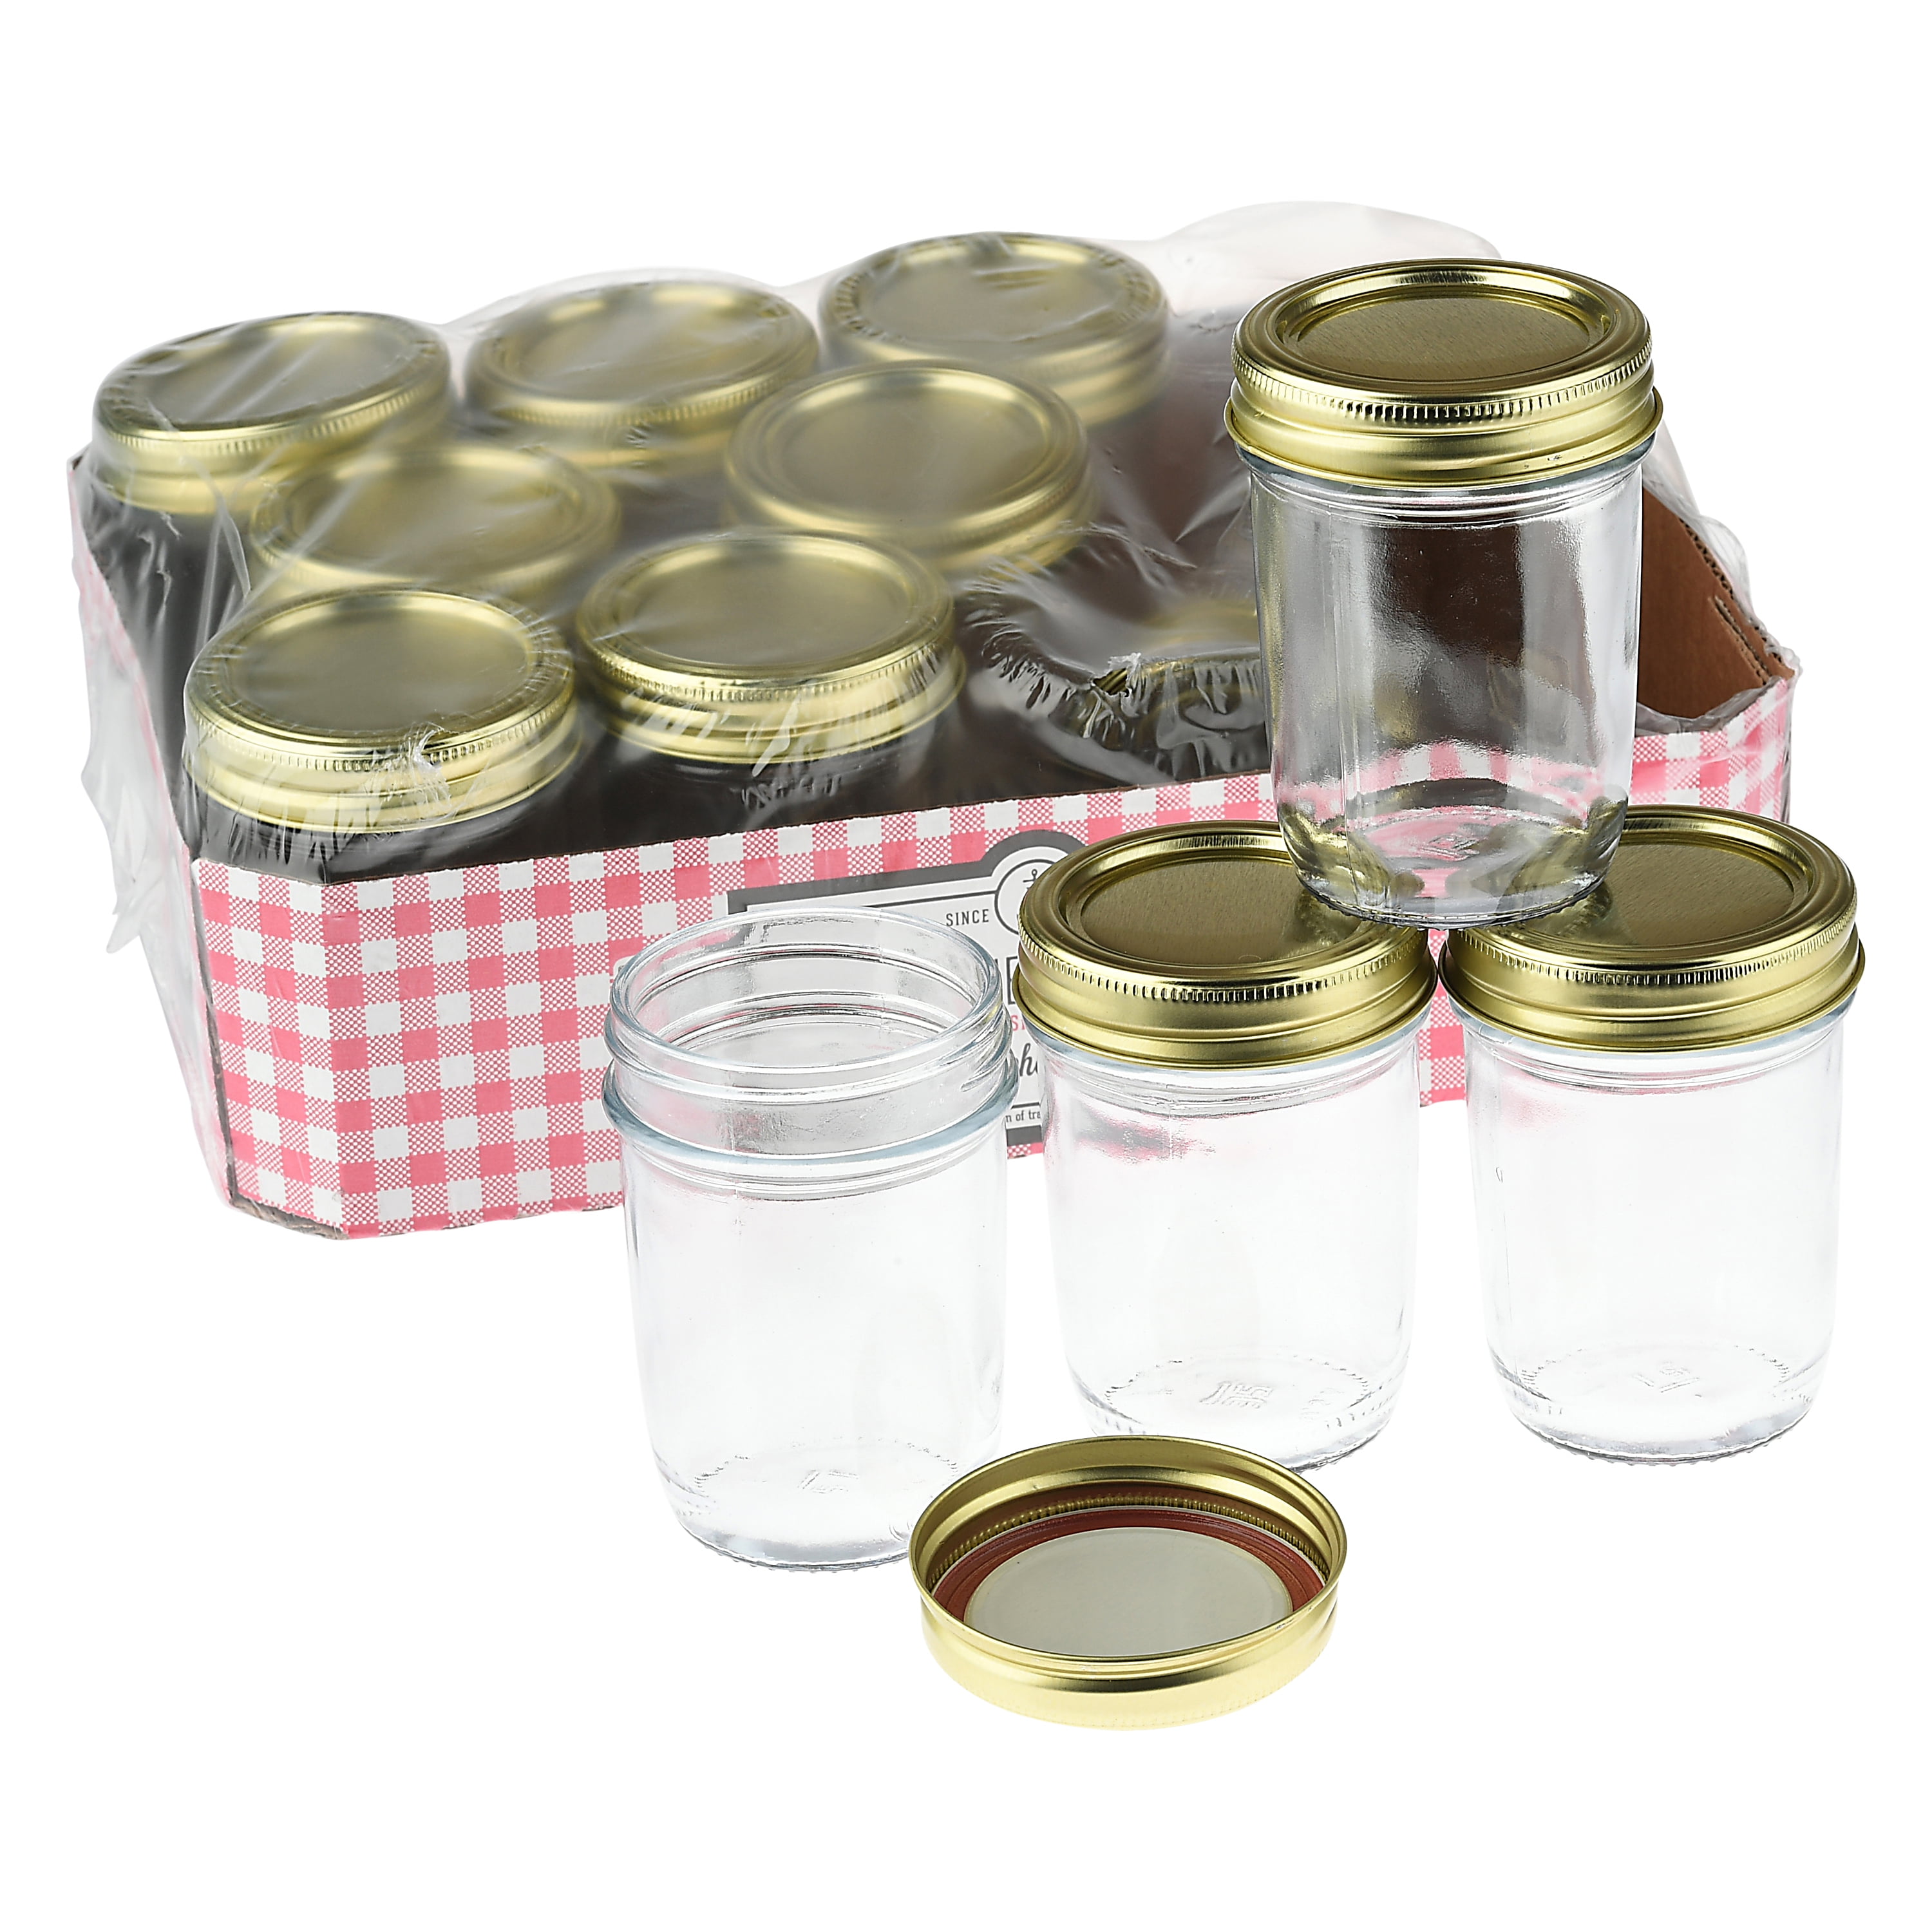 8 oz. Anchor Canning Jar | 12 Pack